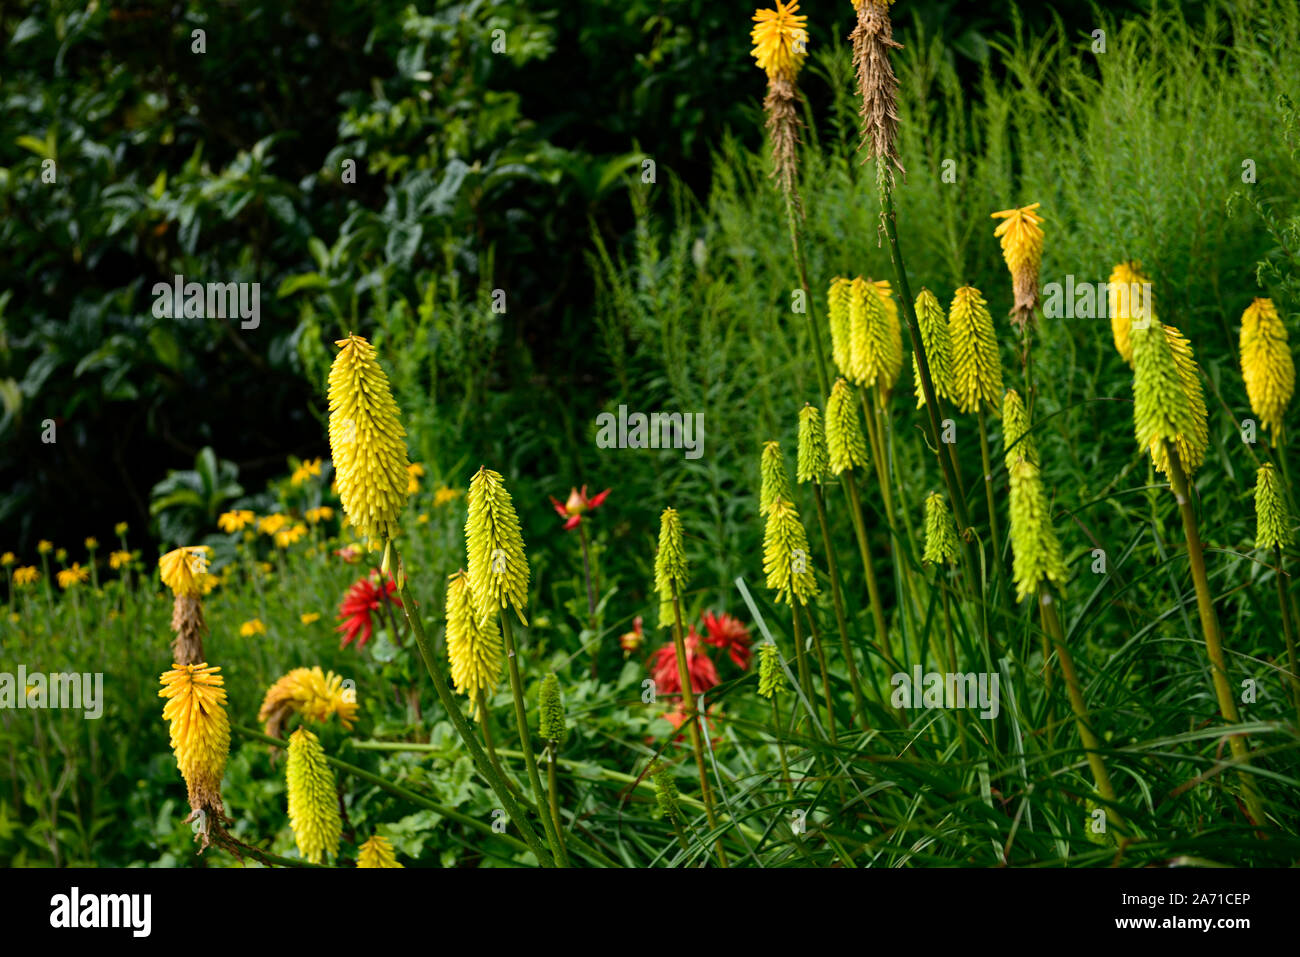 Kniphofia api limone,Torcia lily,red hot poker,giallo,fiore tubolare spike,fiori,fioritura,RM Floral Foto Stock